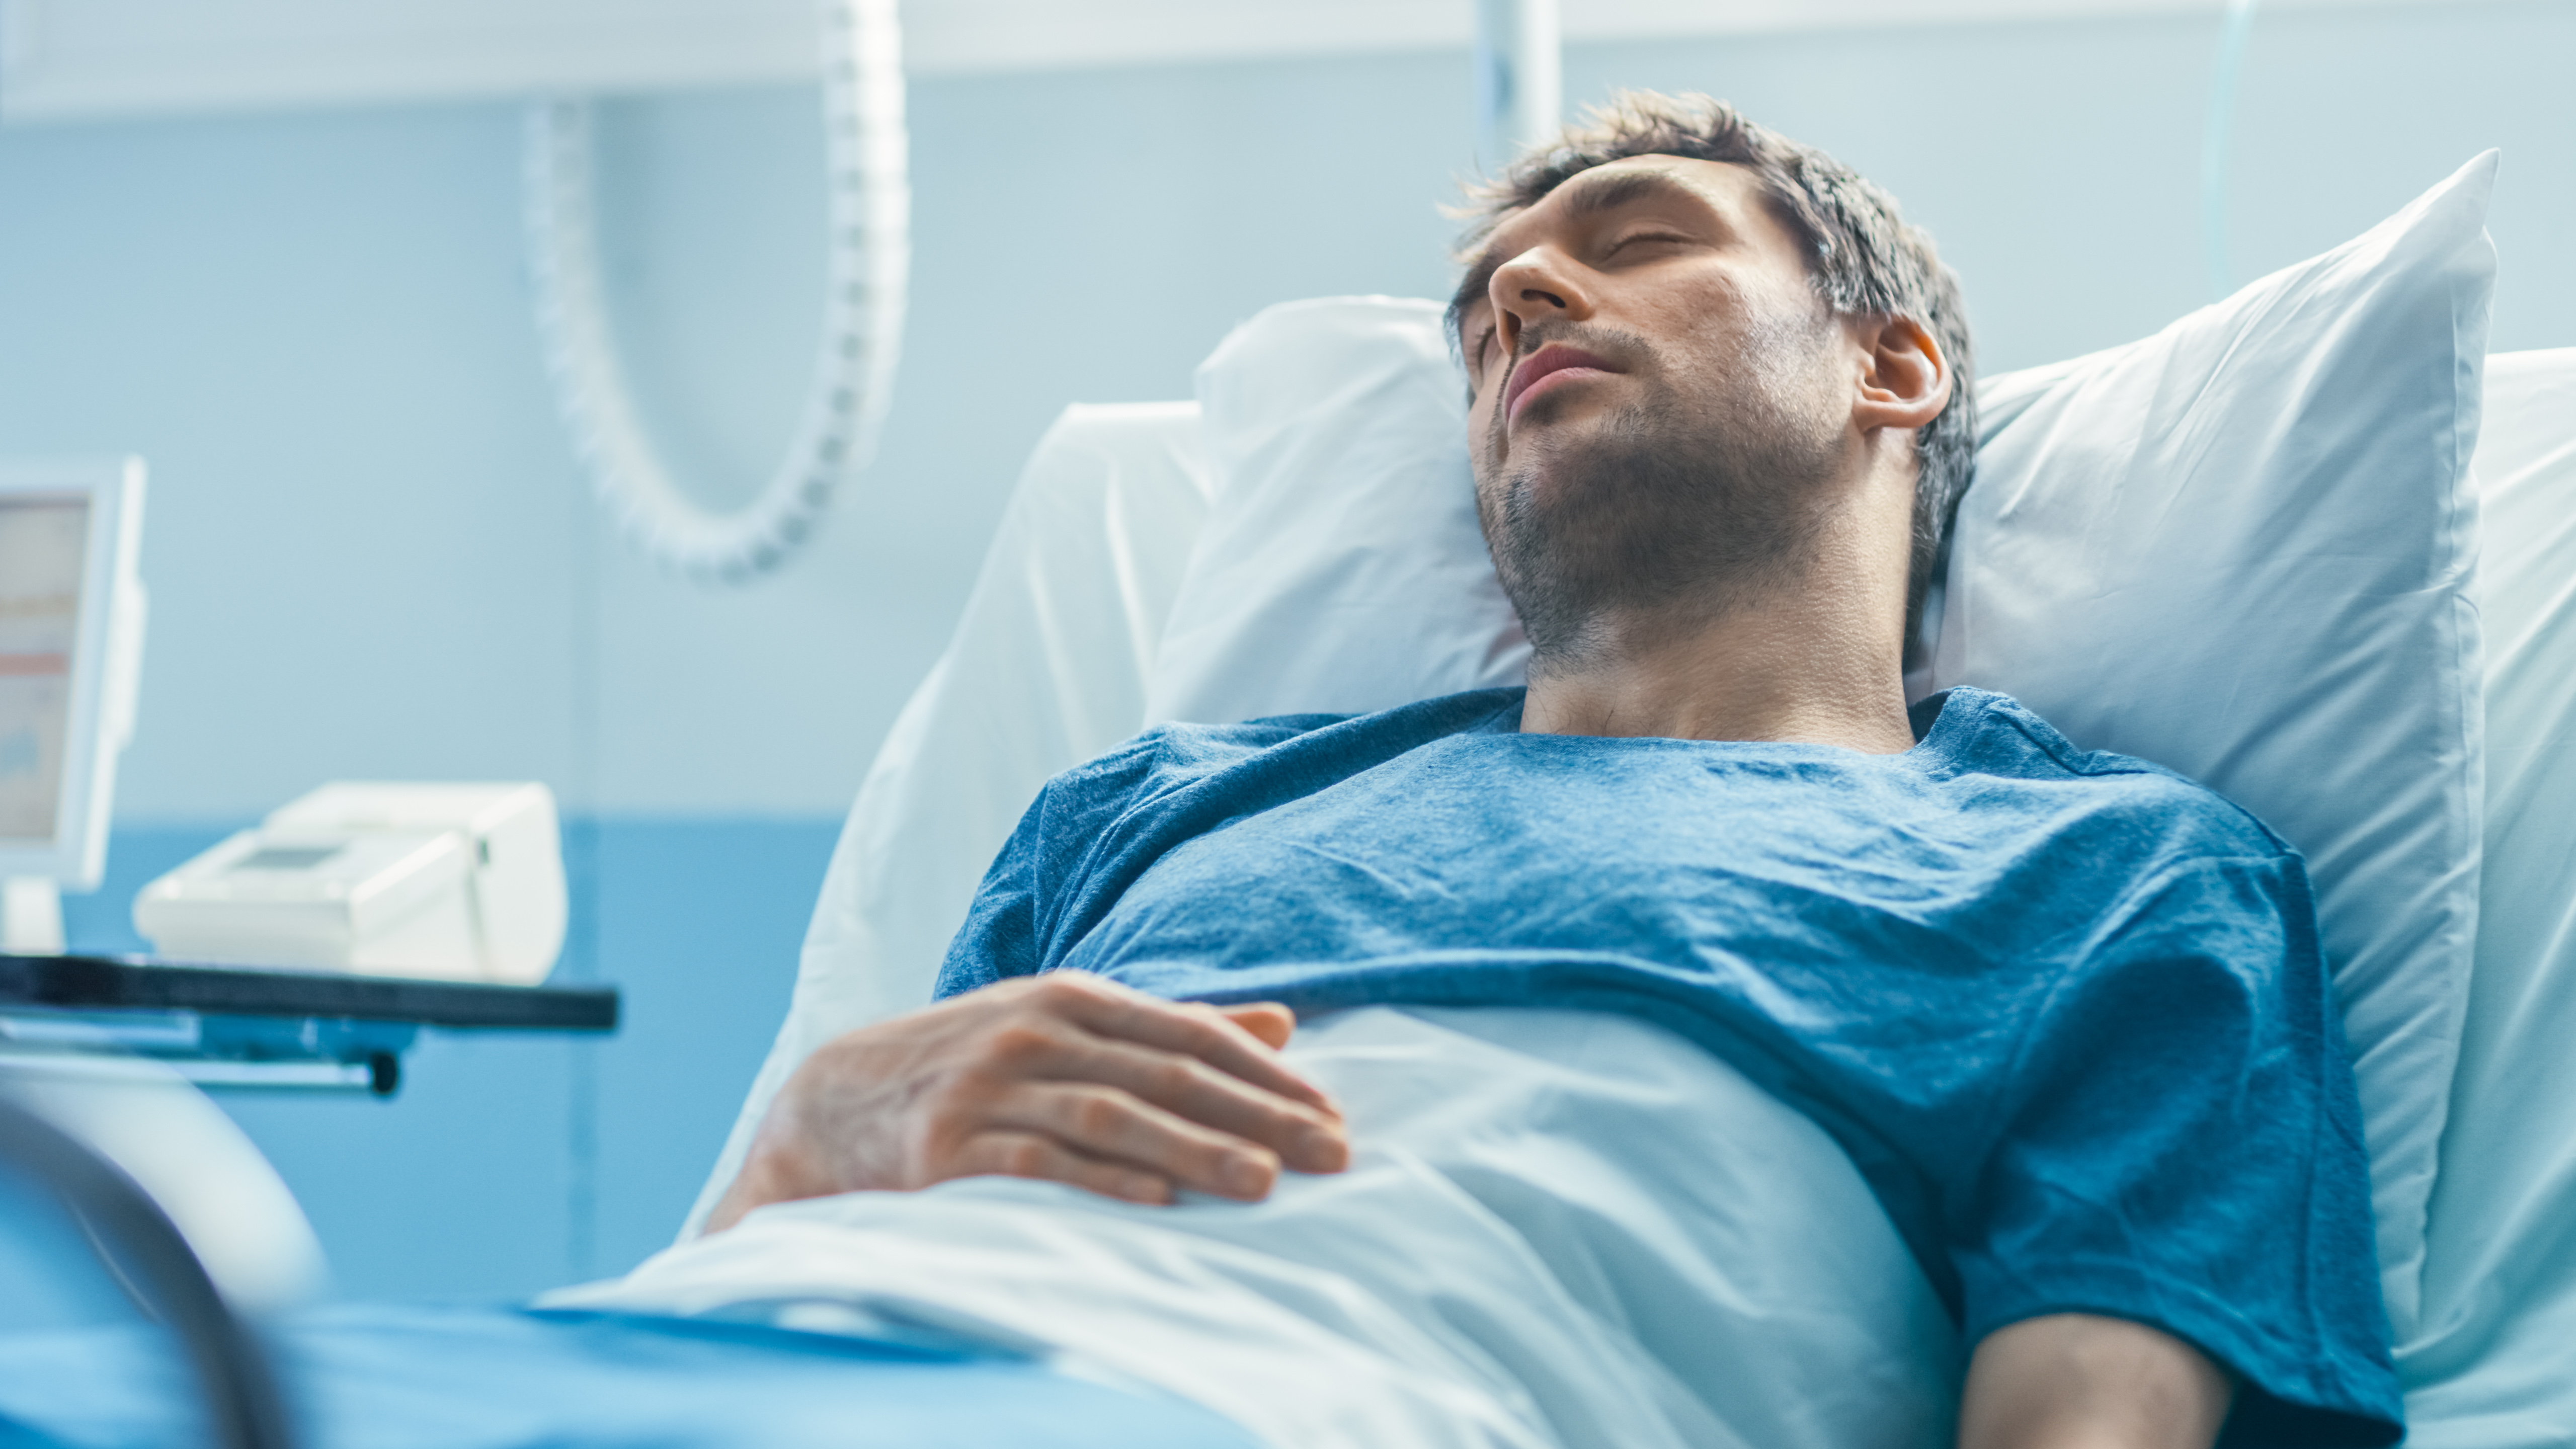 A man sick in hospital | Source: Shutterstock